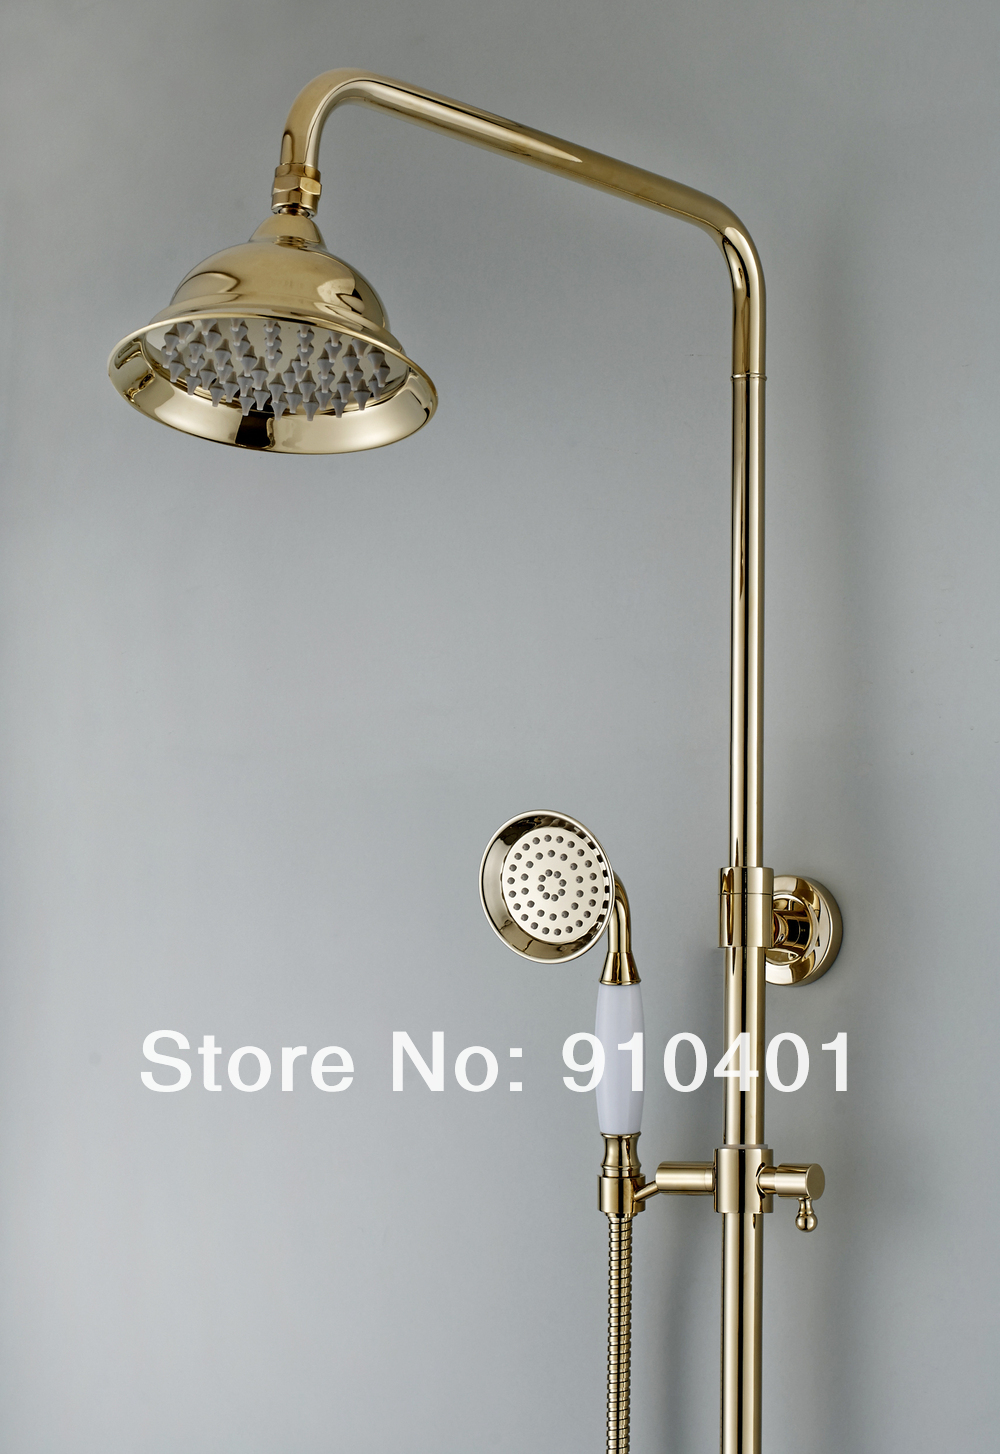 NEW Wholesale /Retail Promotion NEW Luxury Golden Bathroom Shower Faucet Set Ceramic Handles Bathtub Mixer Tap